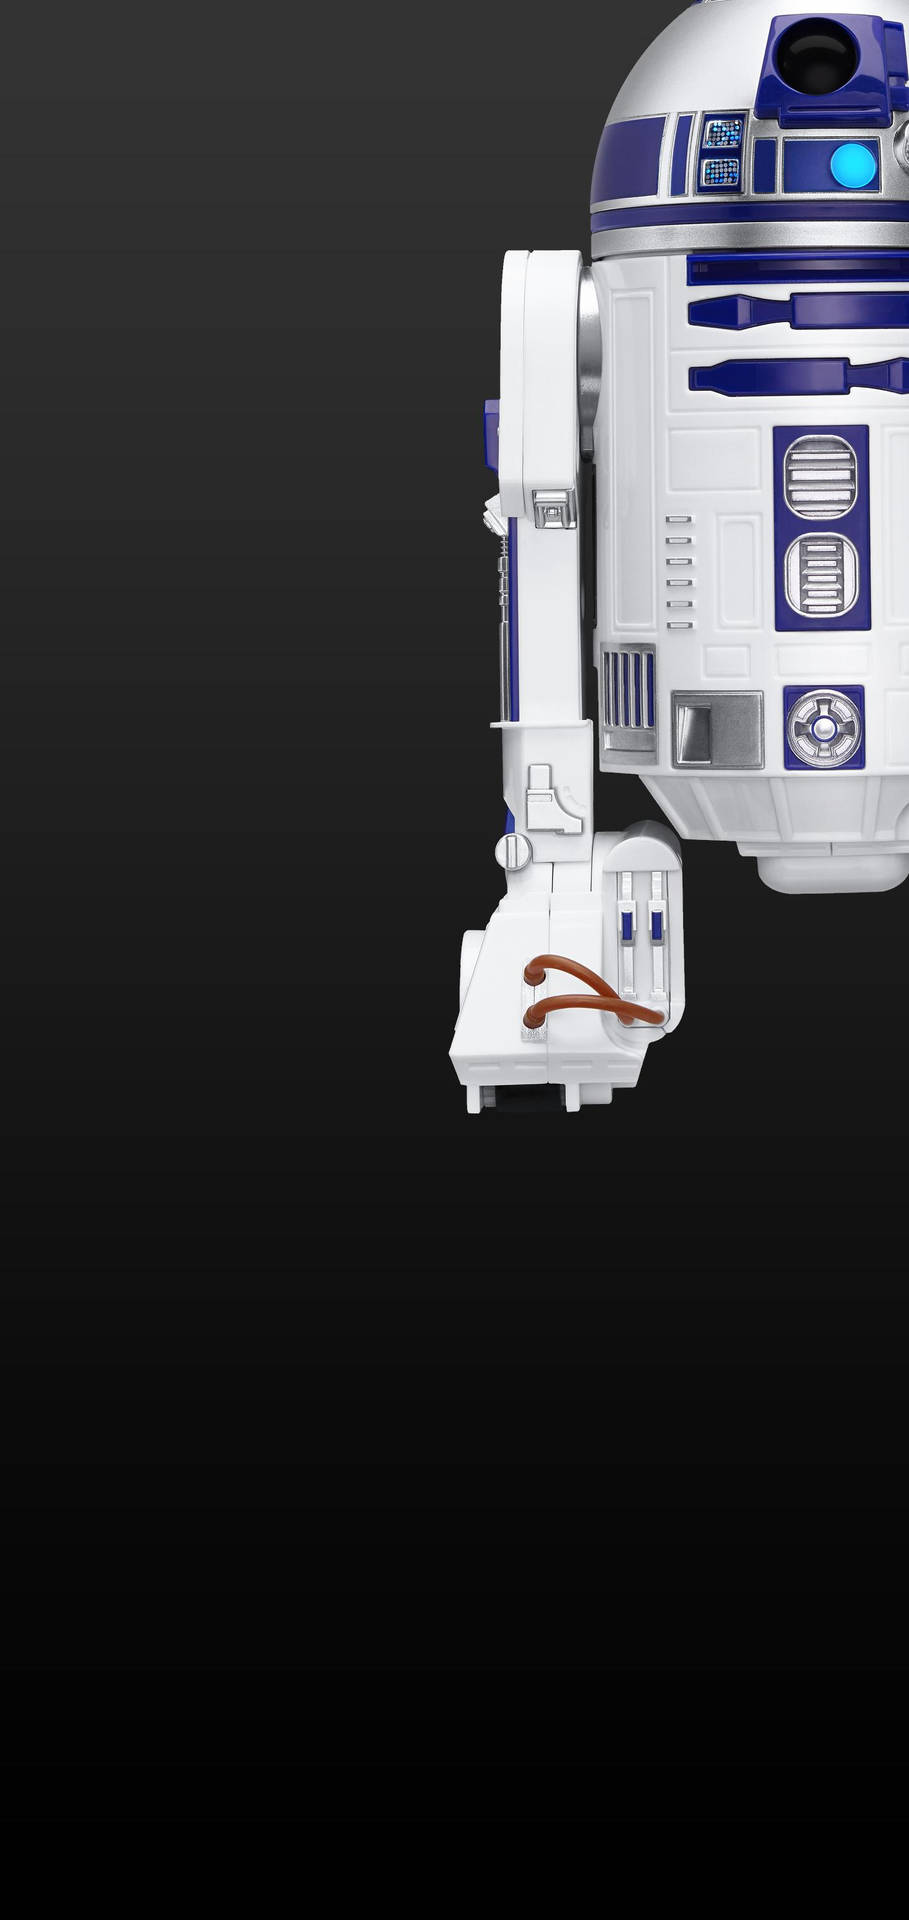 Robot R2-d2 Galaxy S10 Background